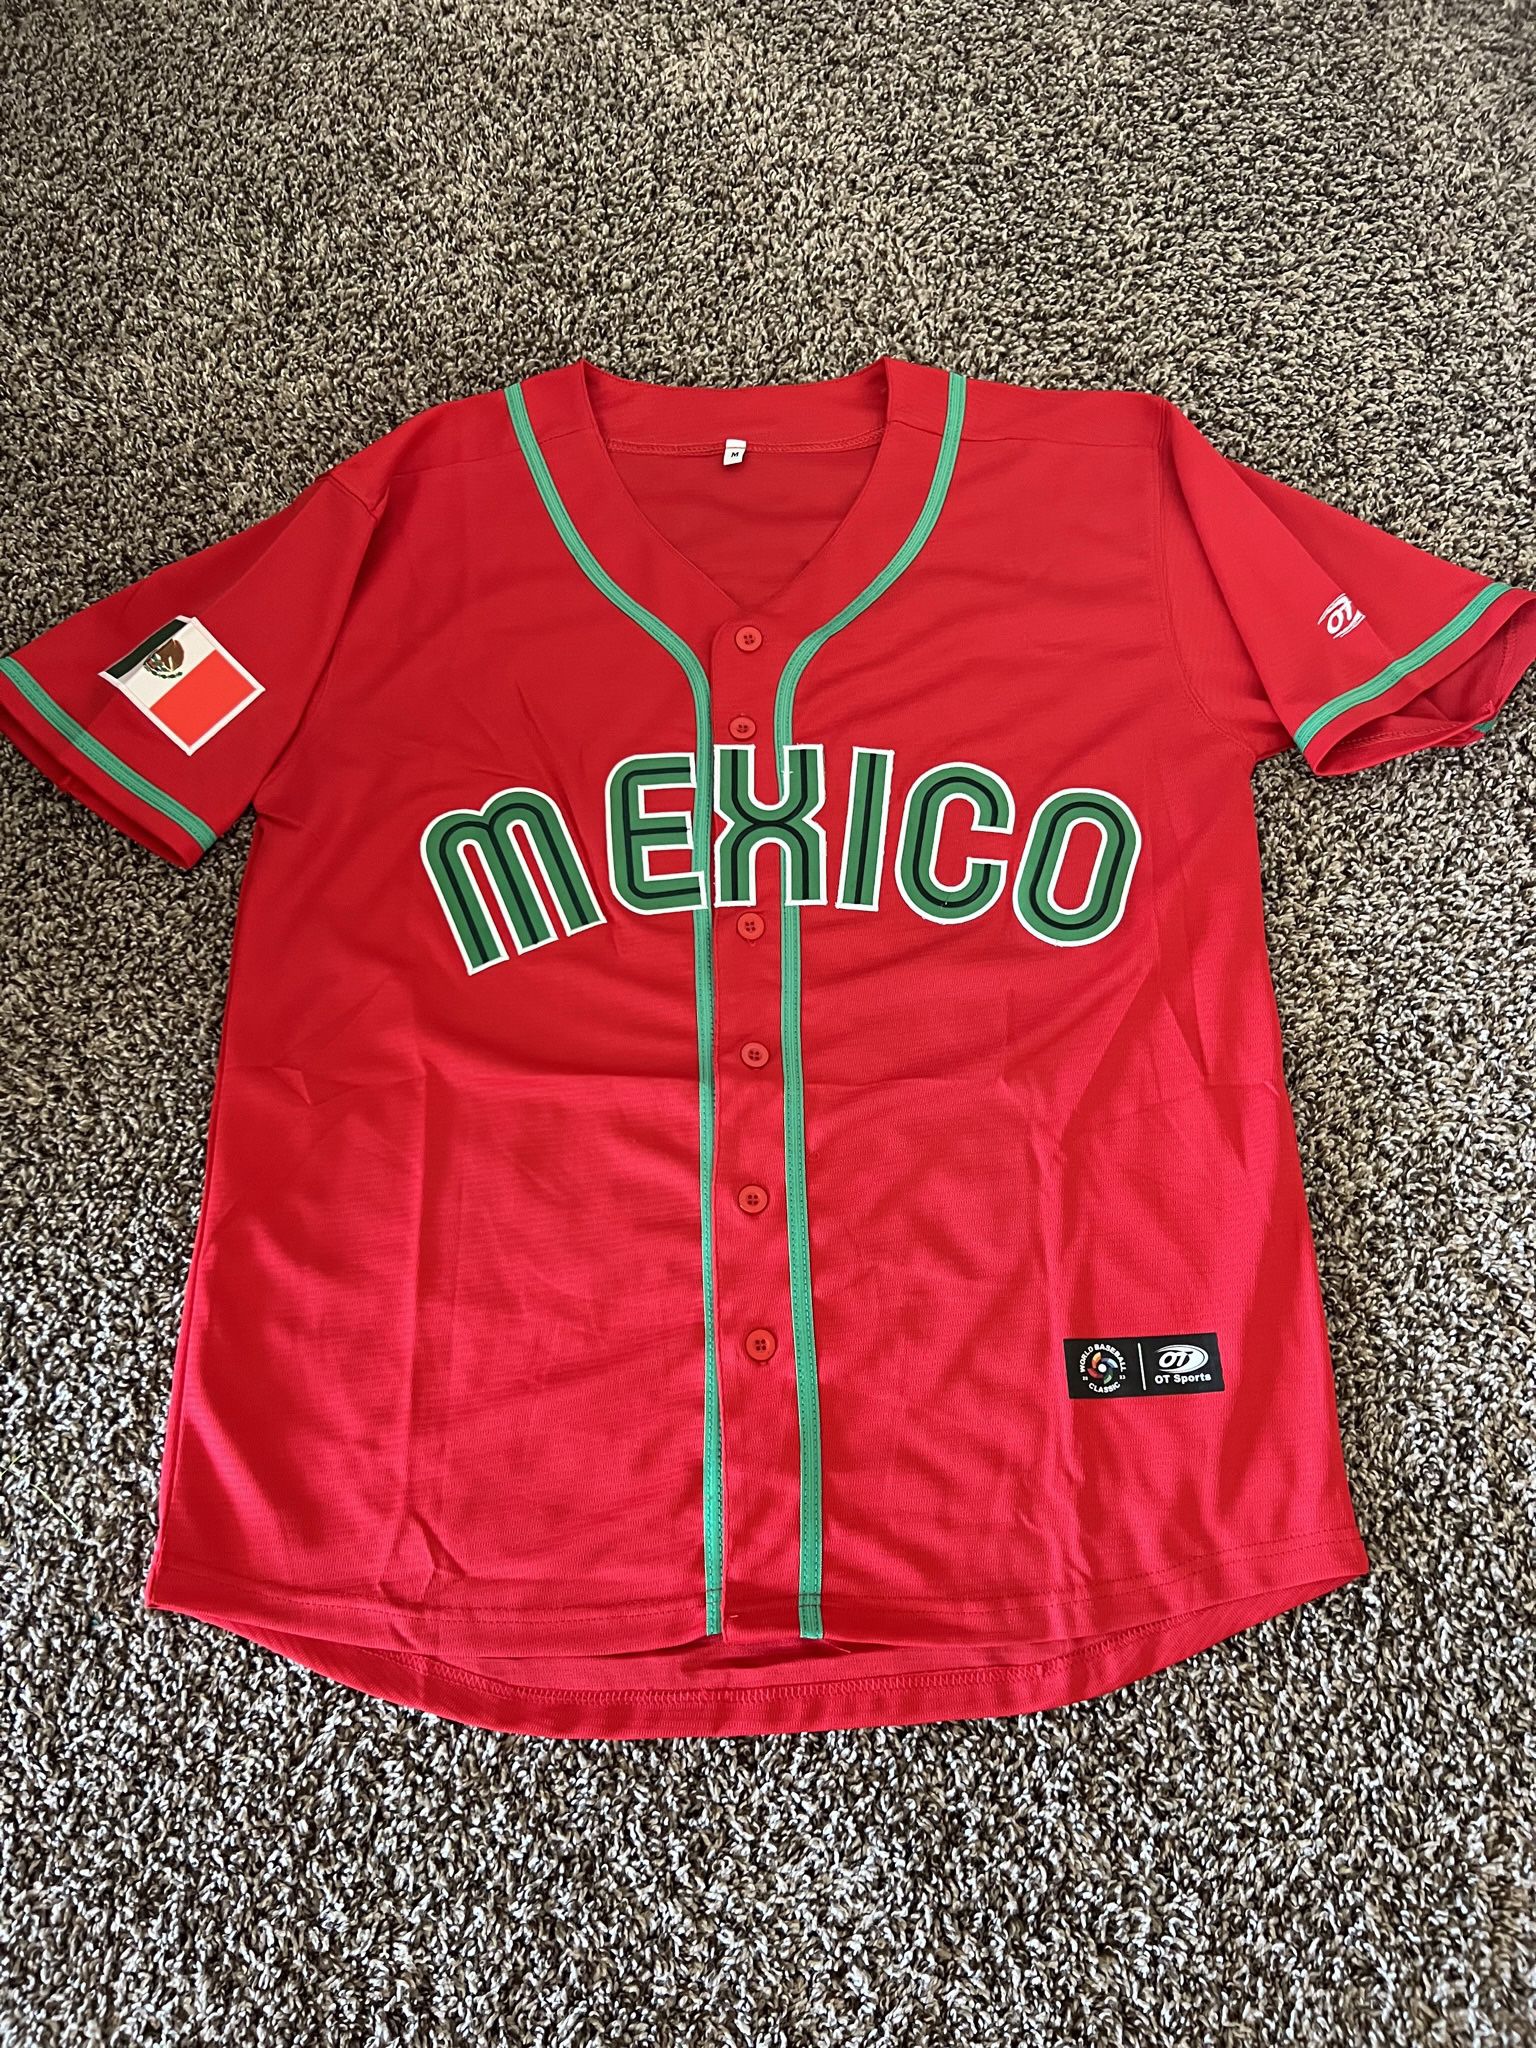 Mexico baseball jersey sizes 3XL,2XL,XL for Sale in Glendale, AZ - OfferUp